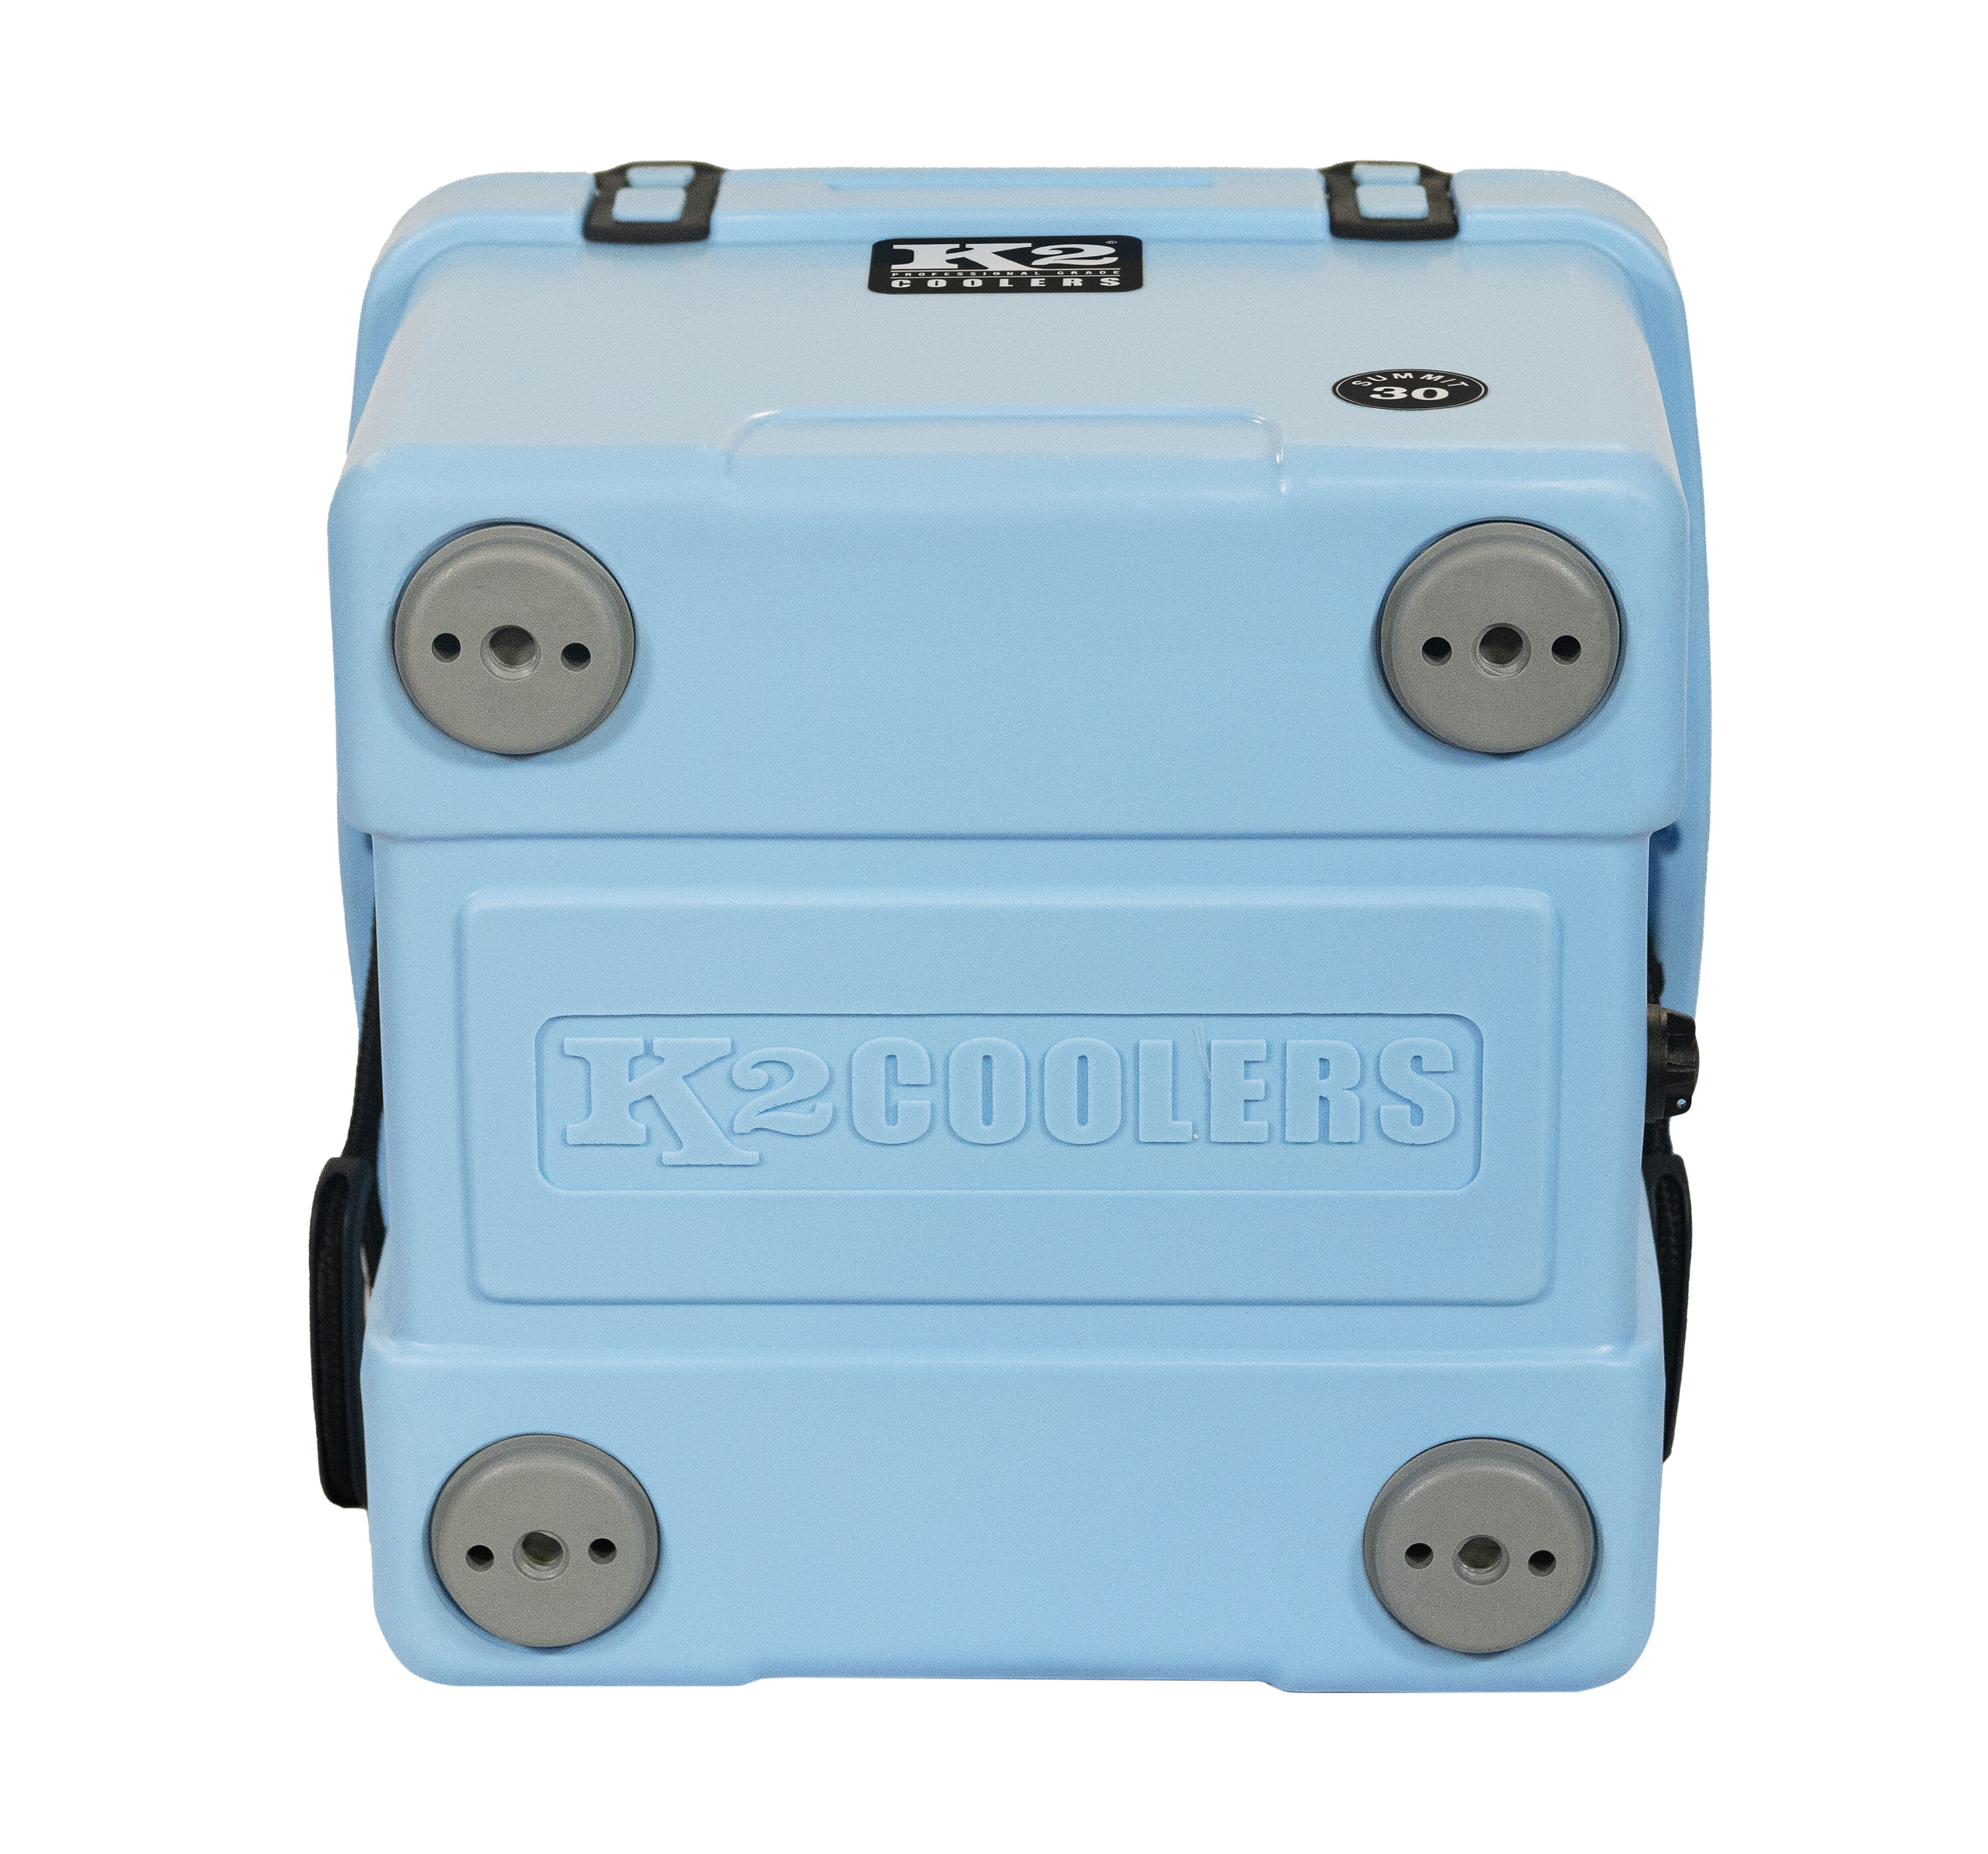 K2 Cooler 70q for Sale in Henderson, NV - OfferUp